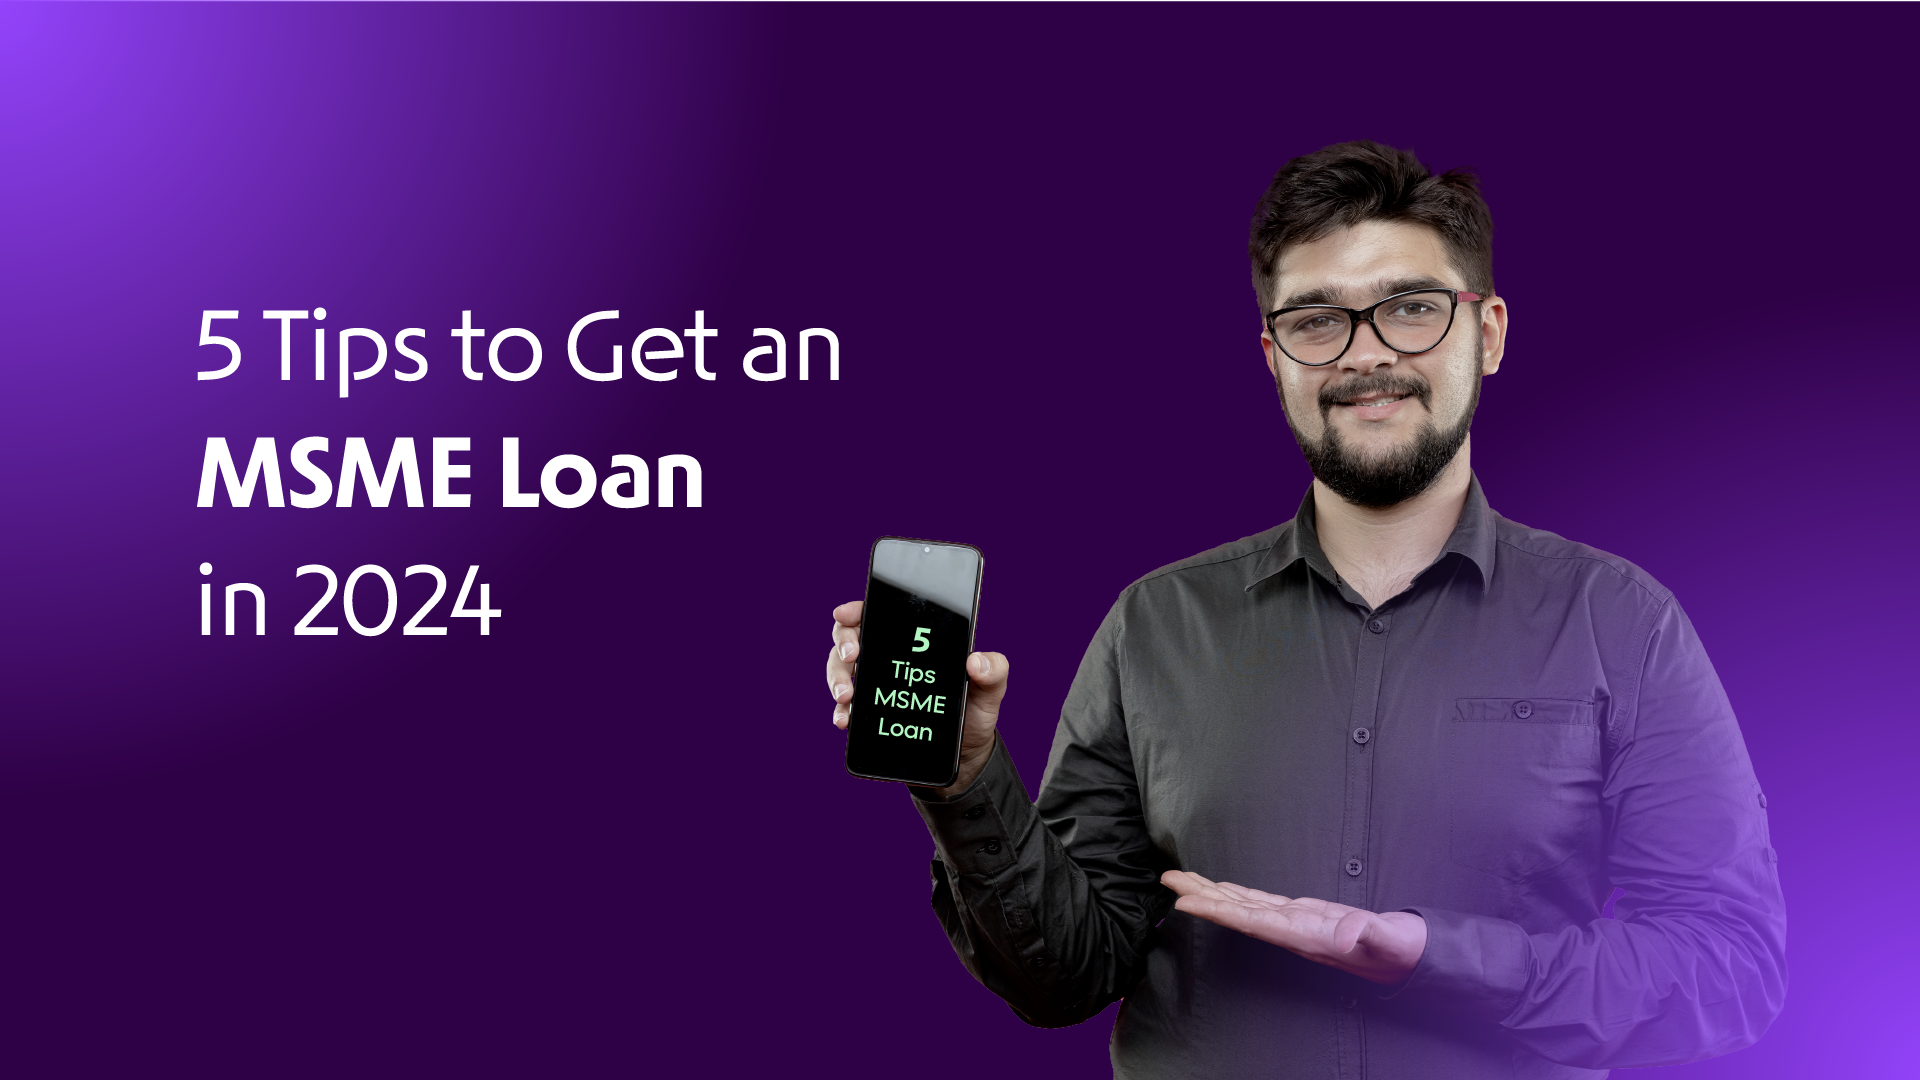 Tips for MSME Loan